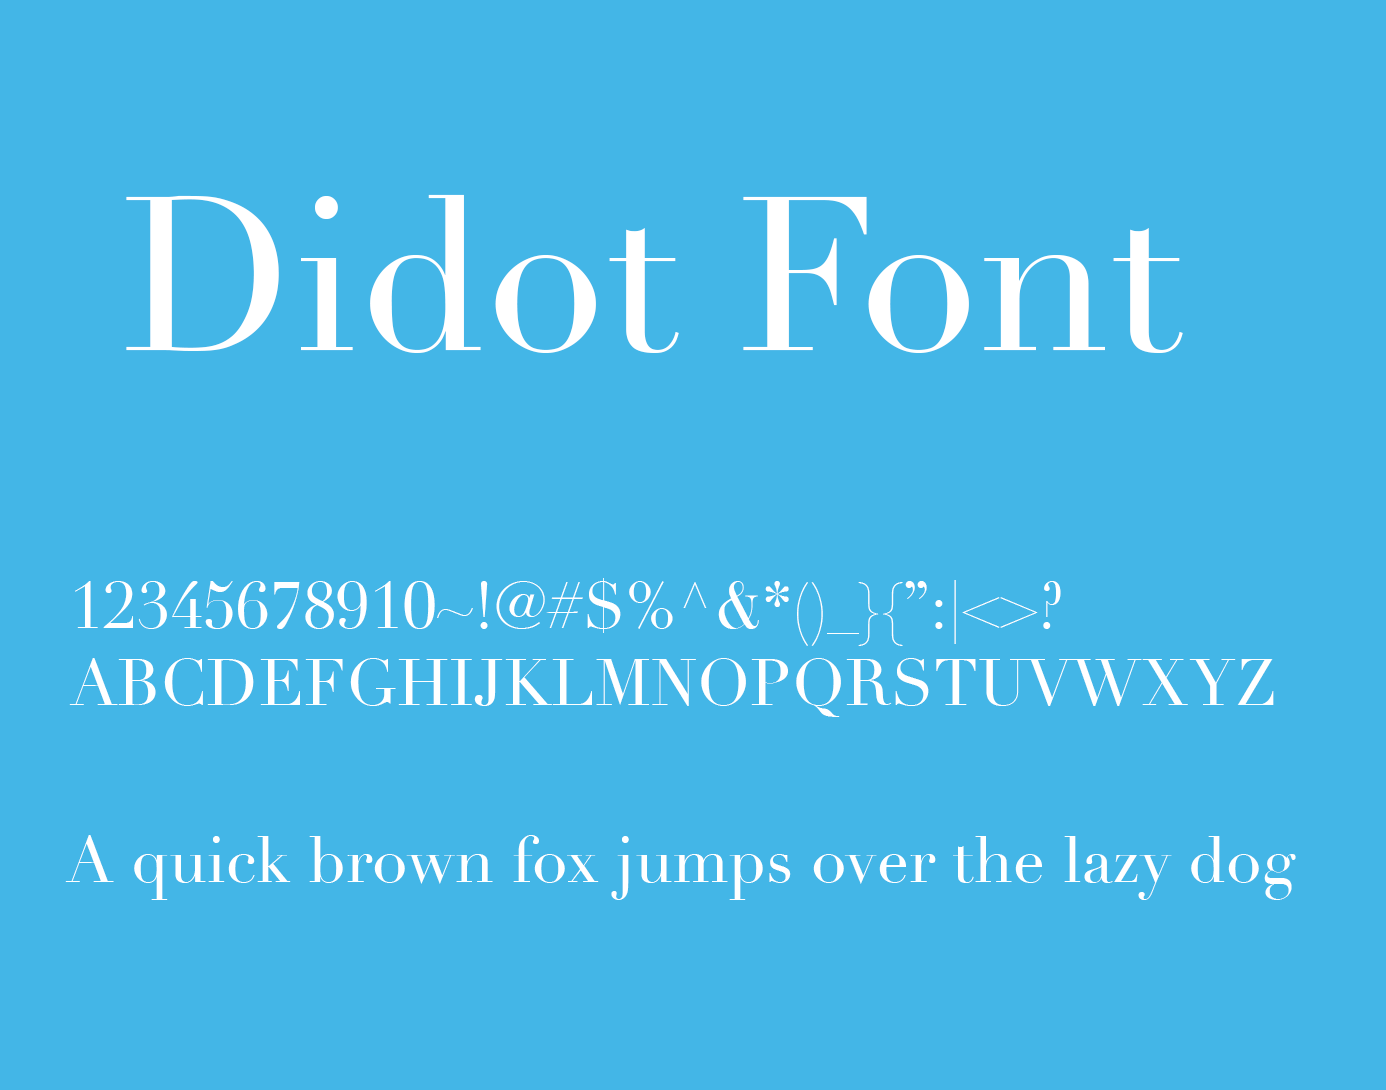 Didot Font Free Download Mac